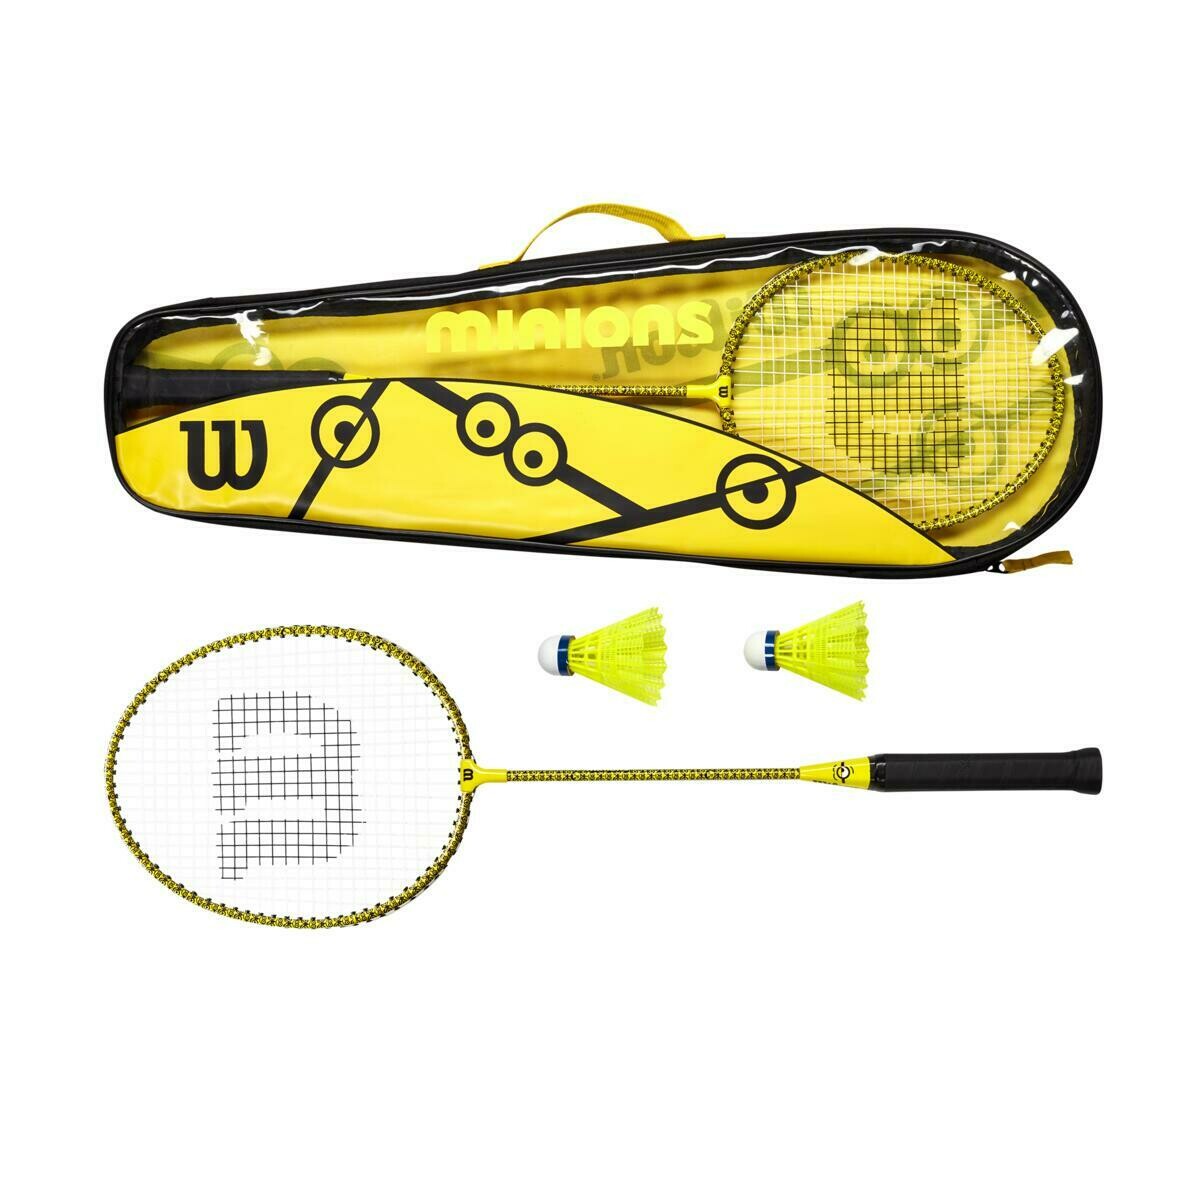 Wilson Minions Badminton Set